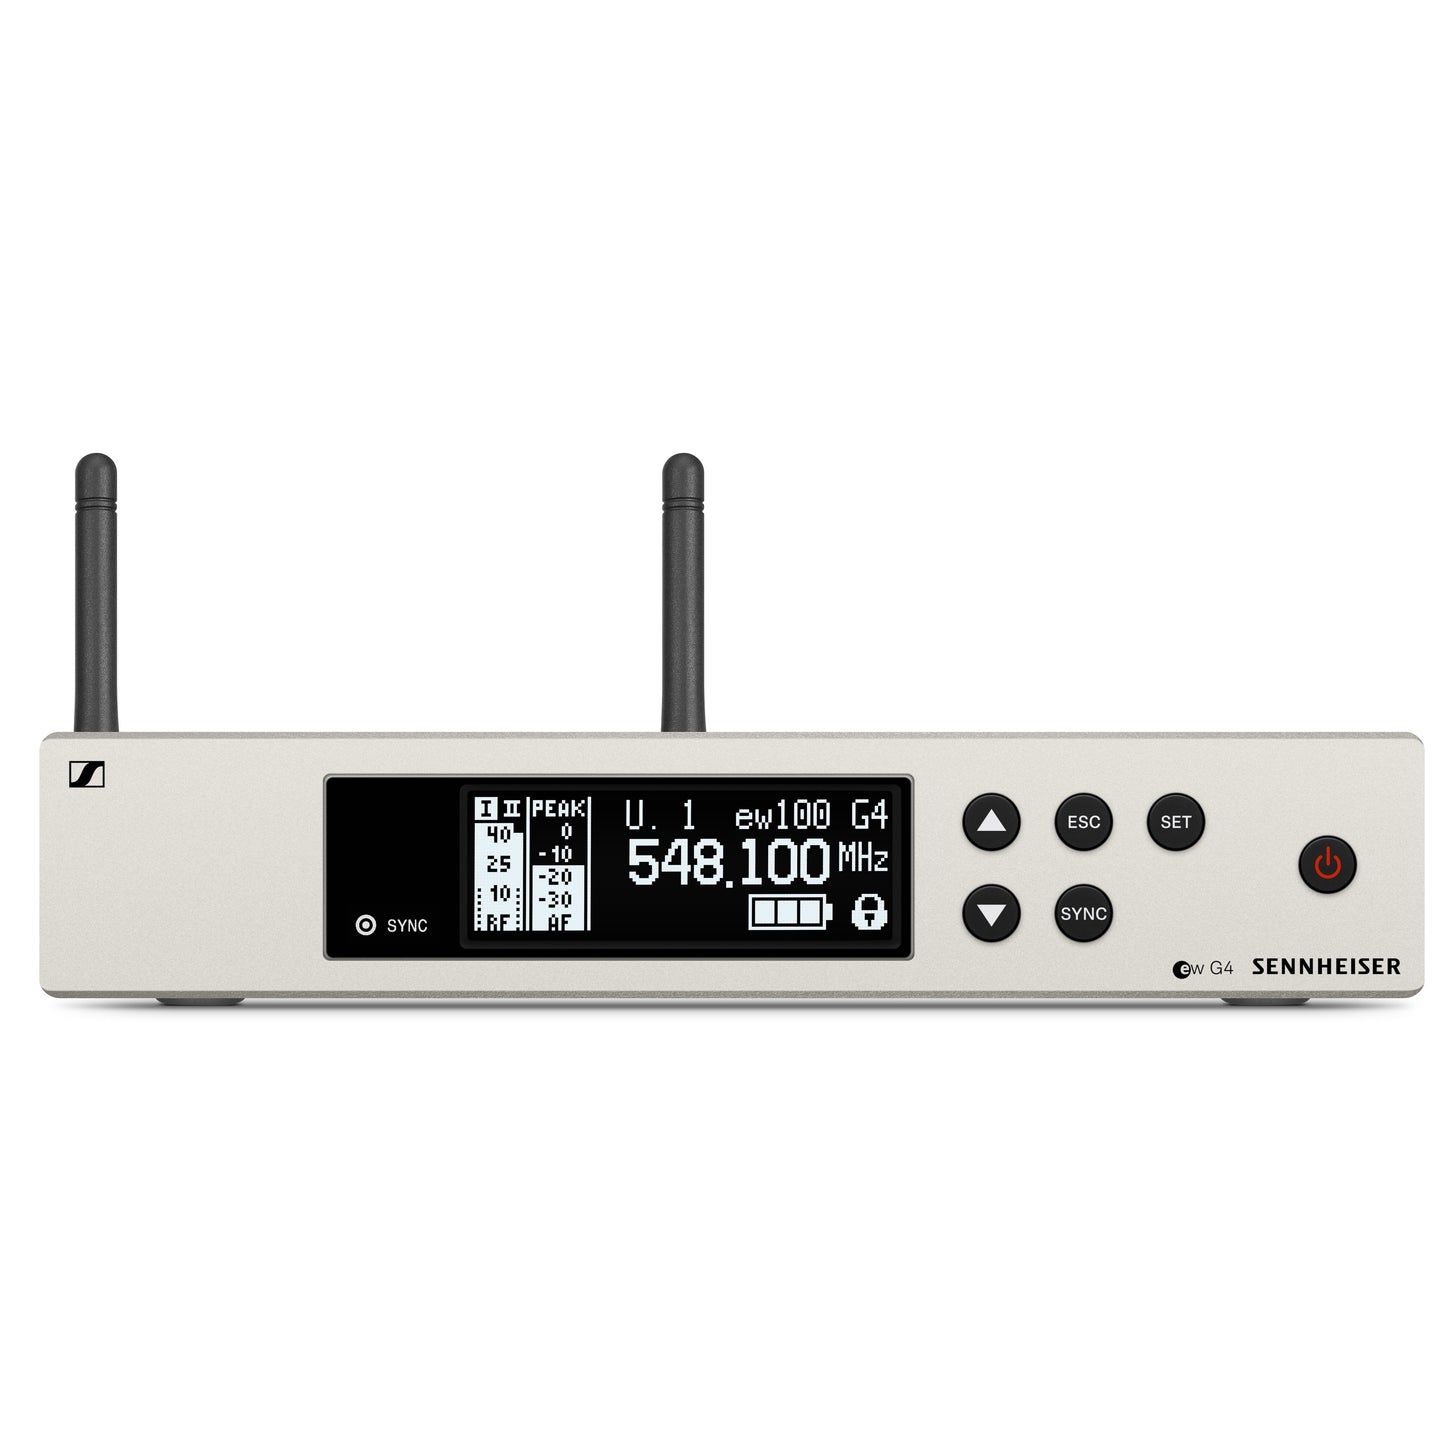 Sennheiser ew100 G4 e865 Vocal Wireless Microphone System, Band A (516-558 MHz)